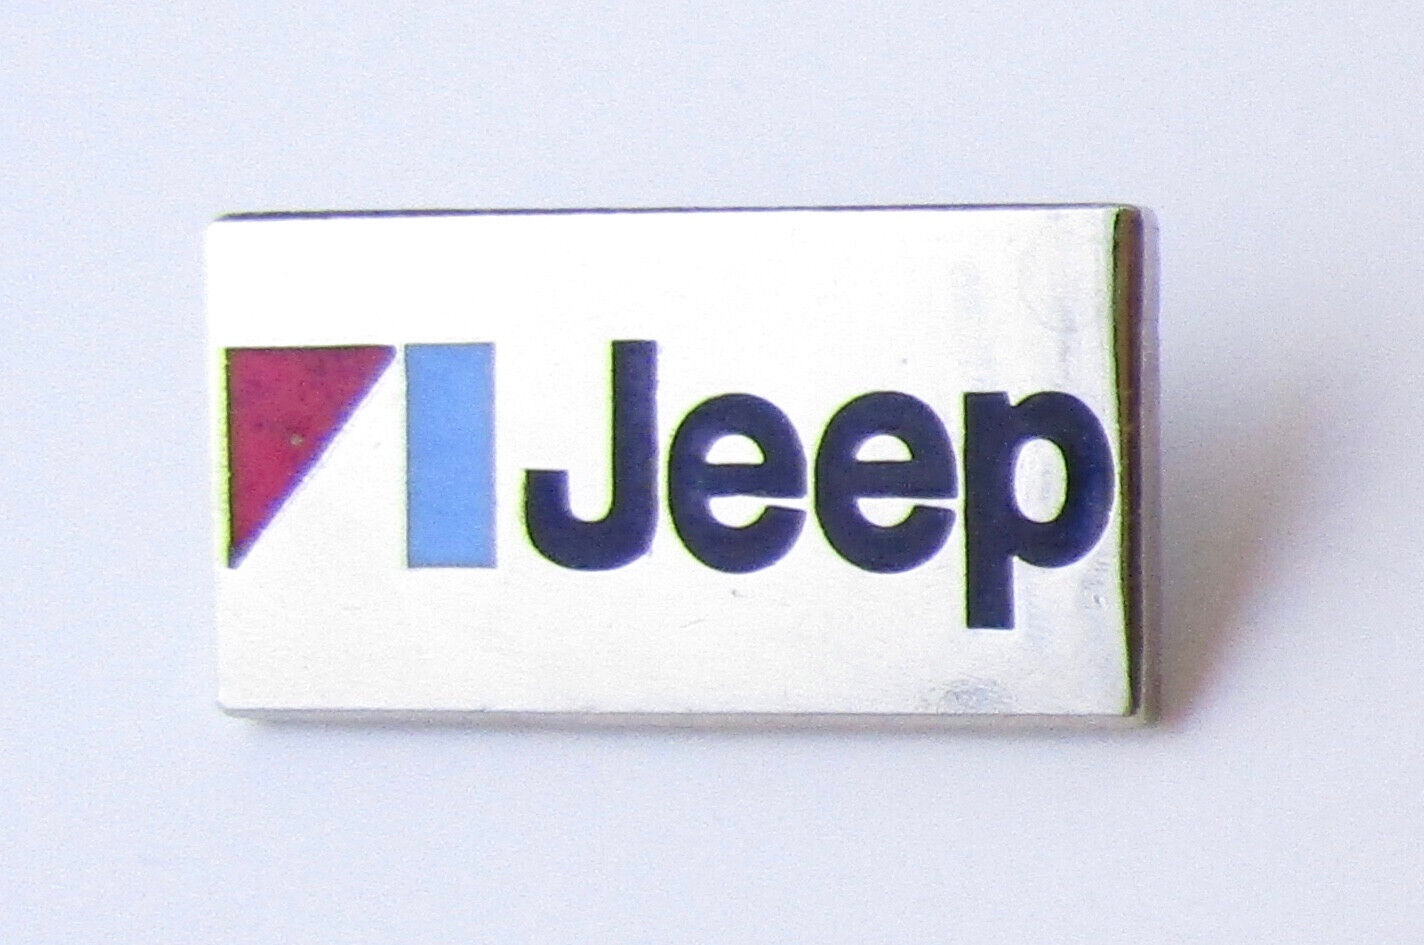 Vintage JEEP Enamel Pin Badge - Classic Car, Jeep, 4x4, Motor, Automobila